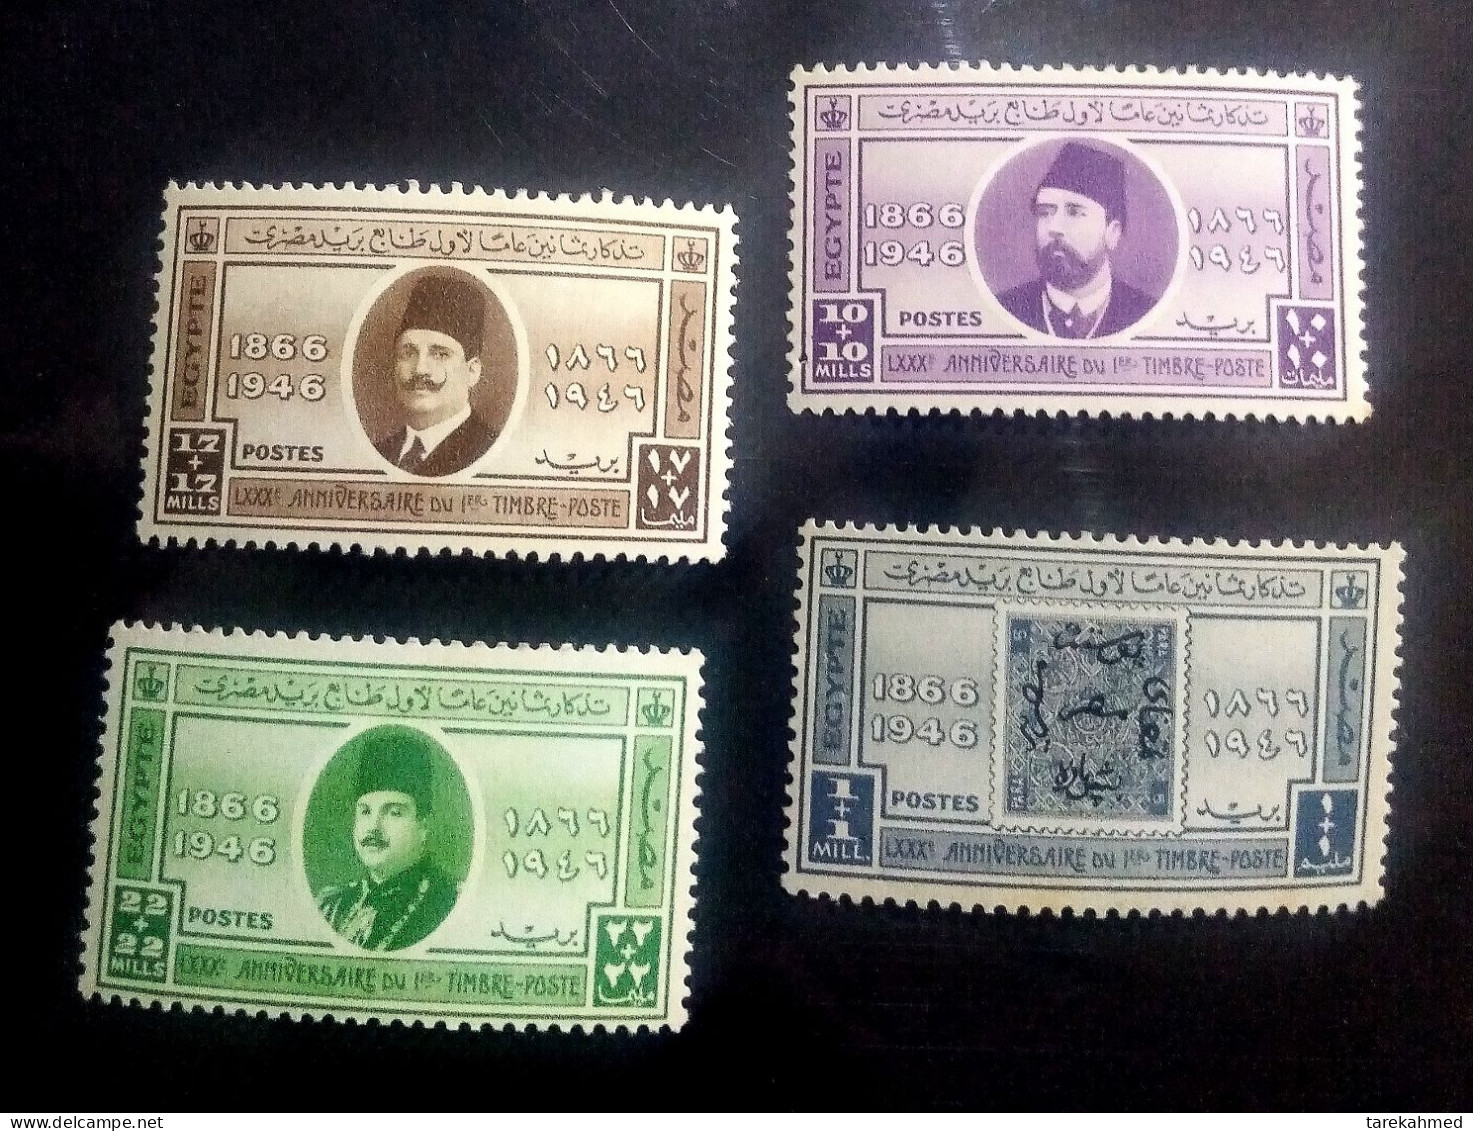 Egypt 1946 - Complete Set Of The 80th Anniv. Of Egypt’s 1st Postage Stamp - MNH, Original Gum. - Nuovi